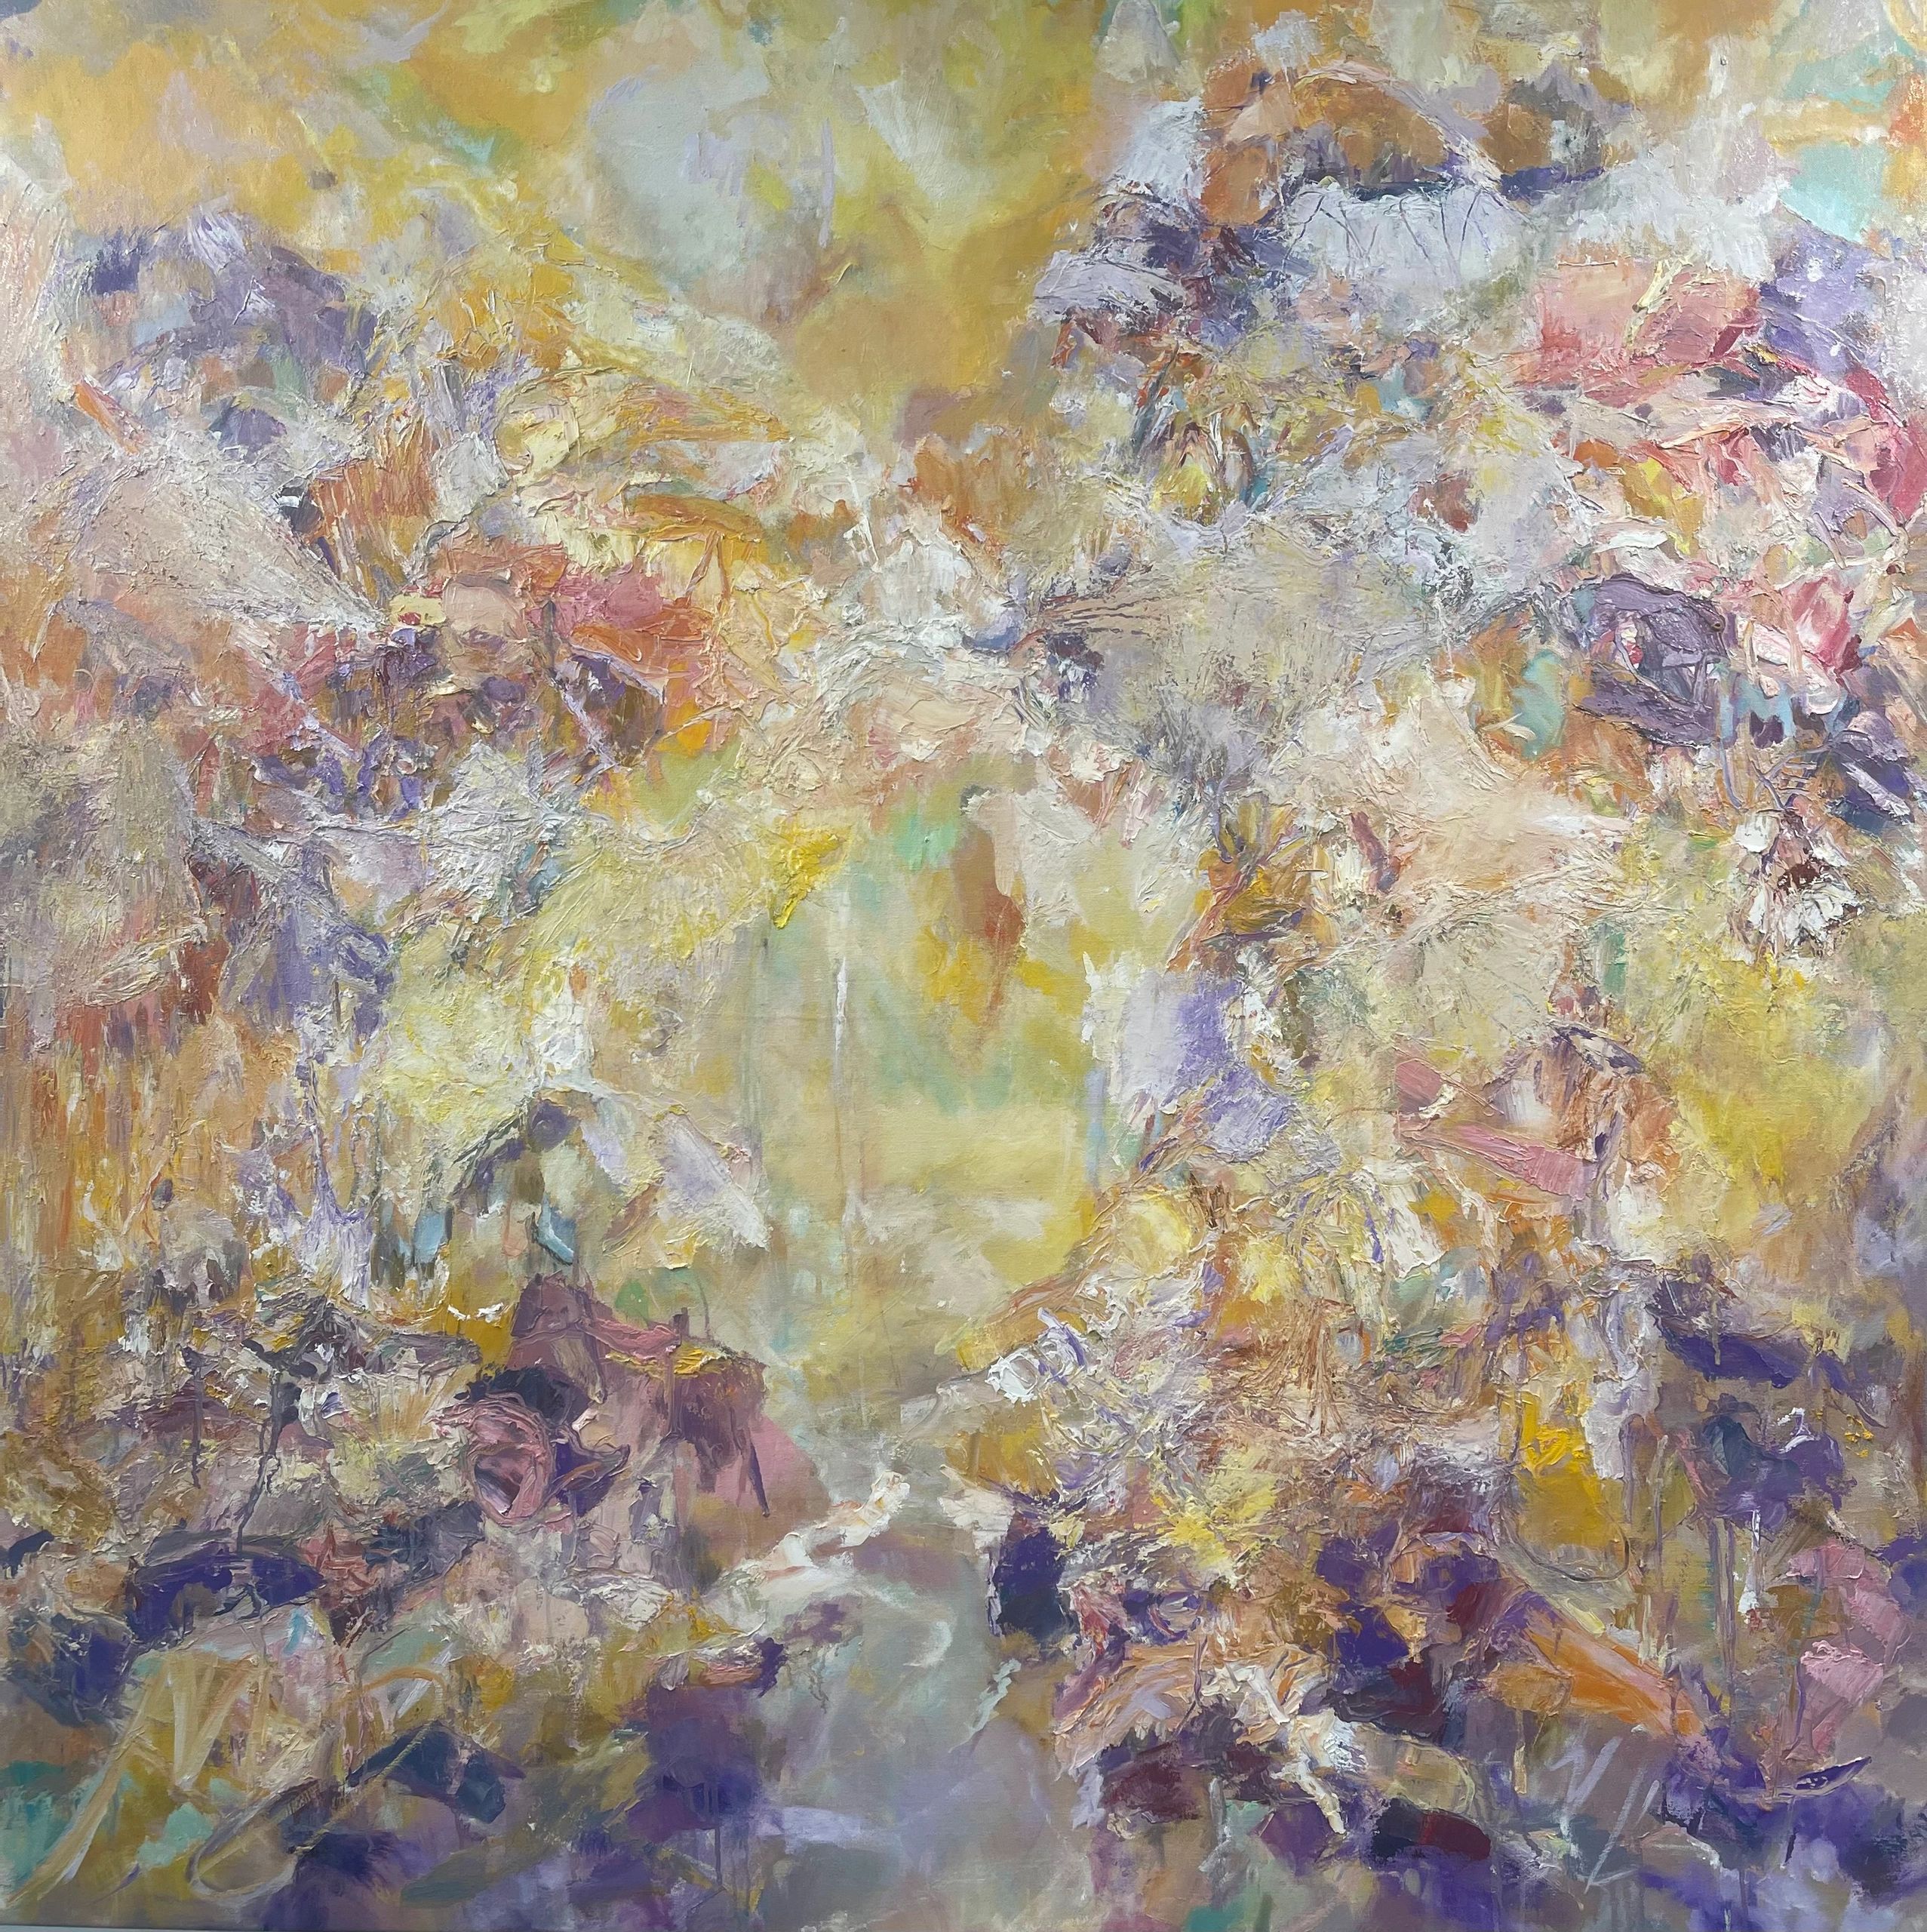 Renaissance Upham Beach 
58x58” oil on canvas